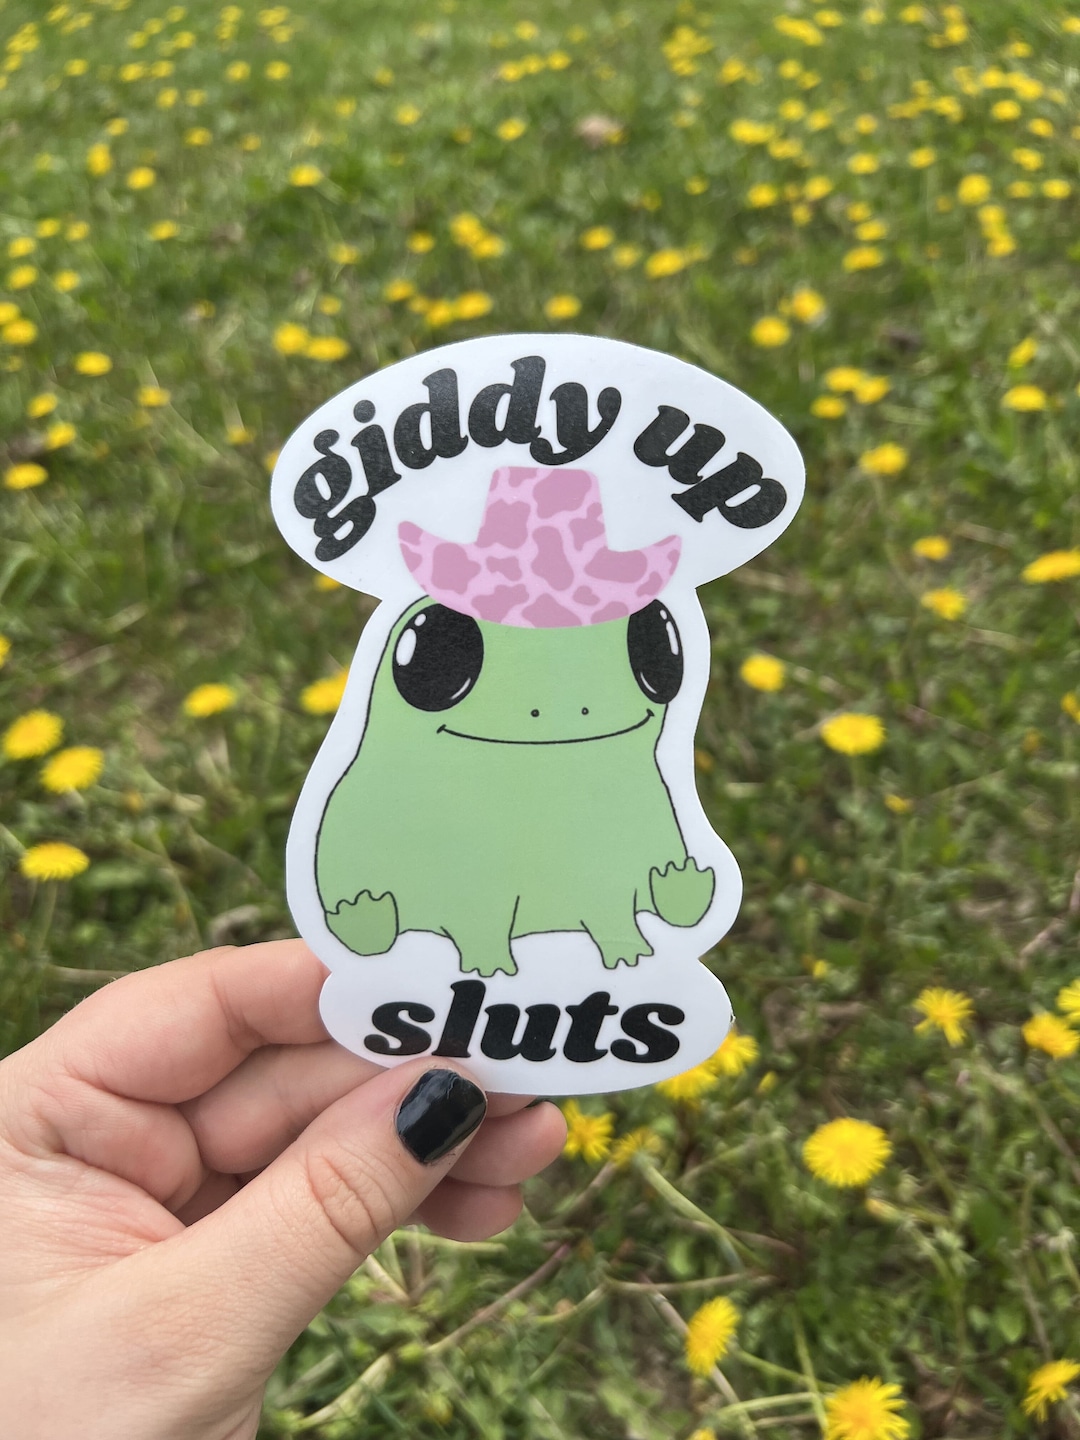 Giddy Up Sluts Bumper Sticker Funny Frog Stickers Cute Etsy